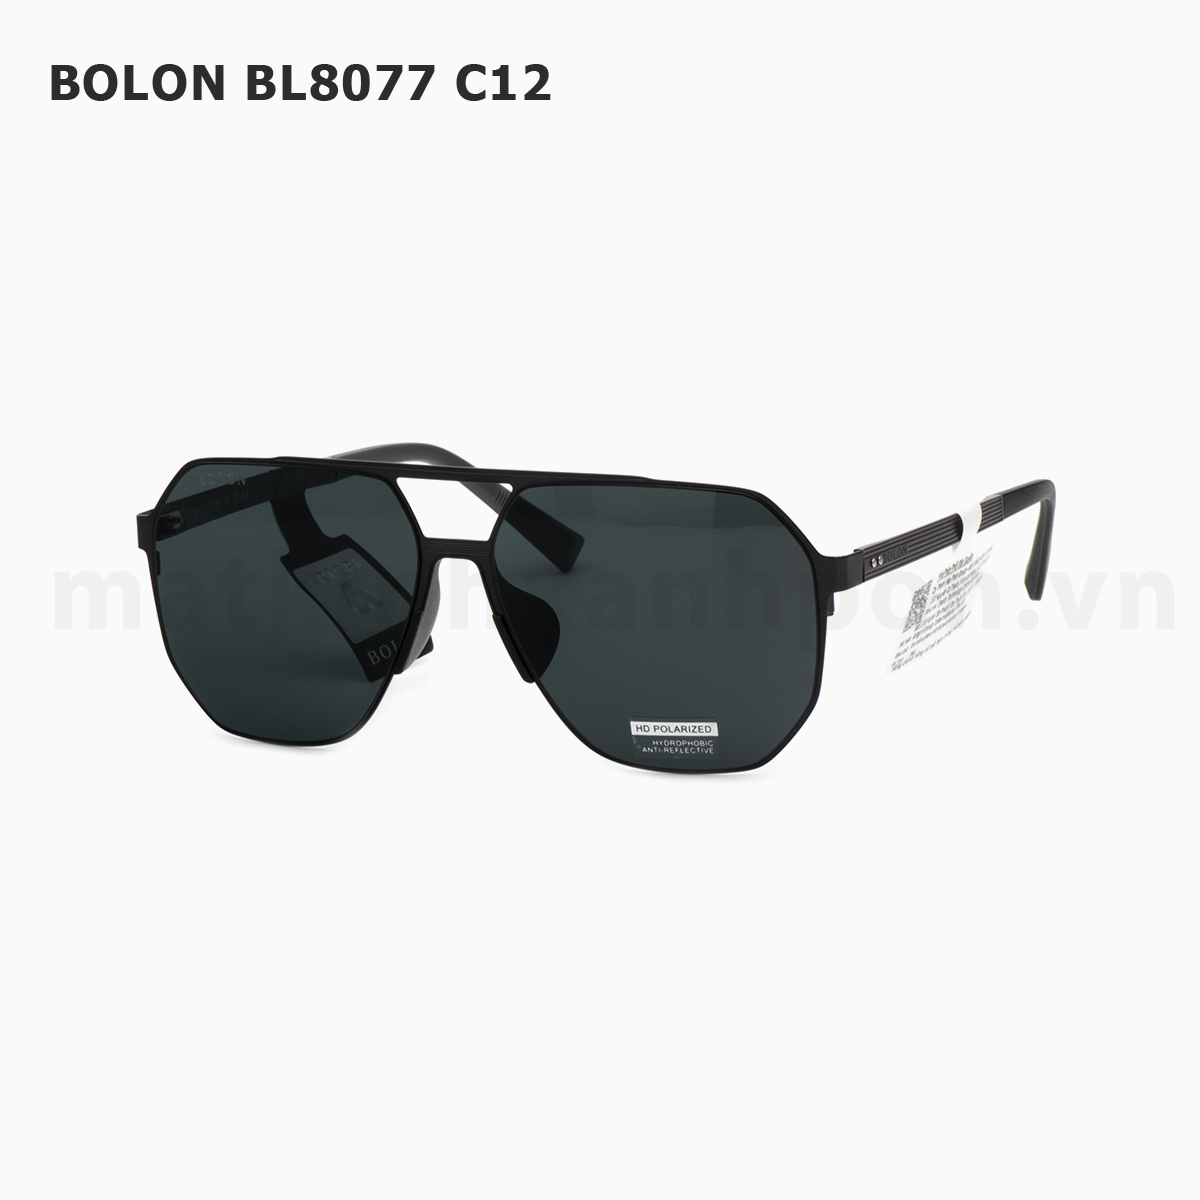 Bolon BL8077 C12